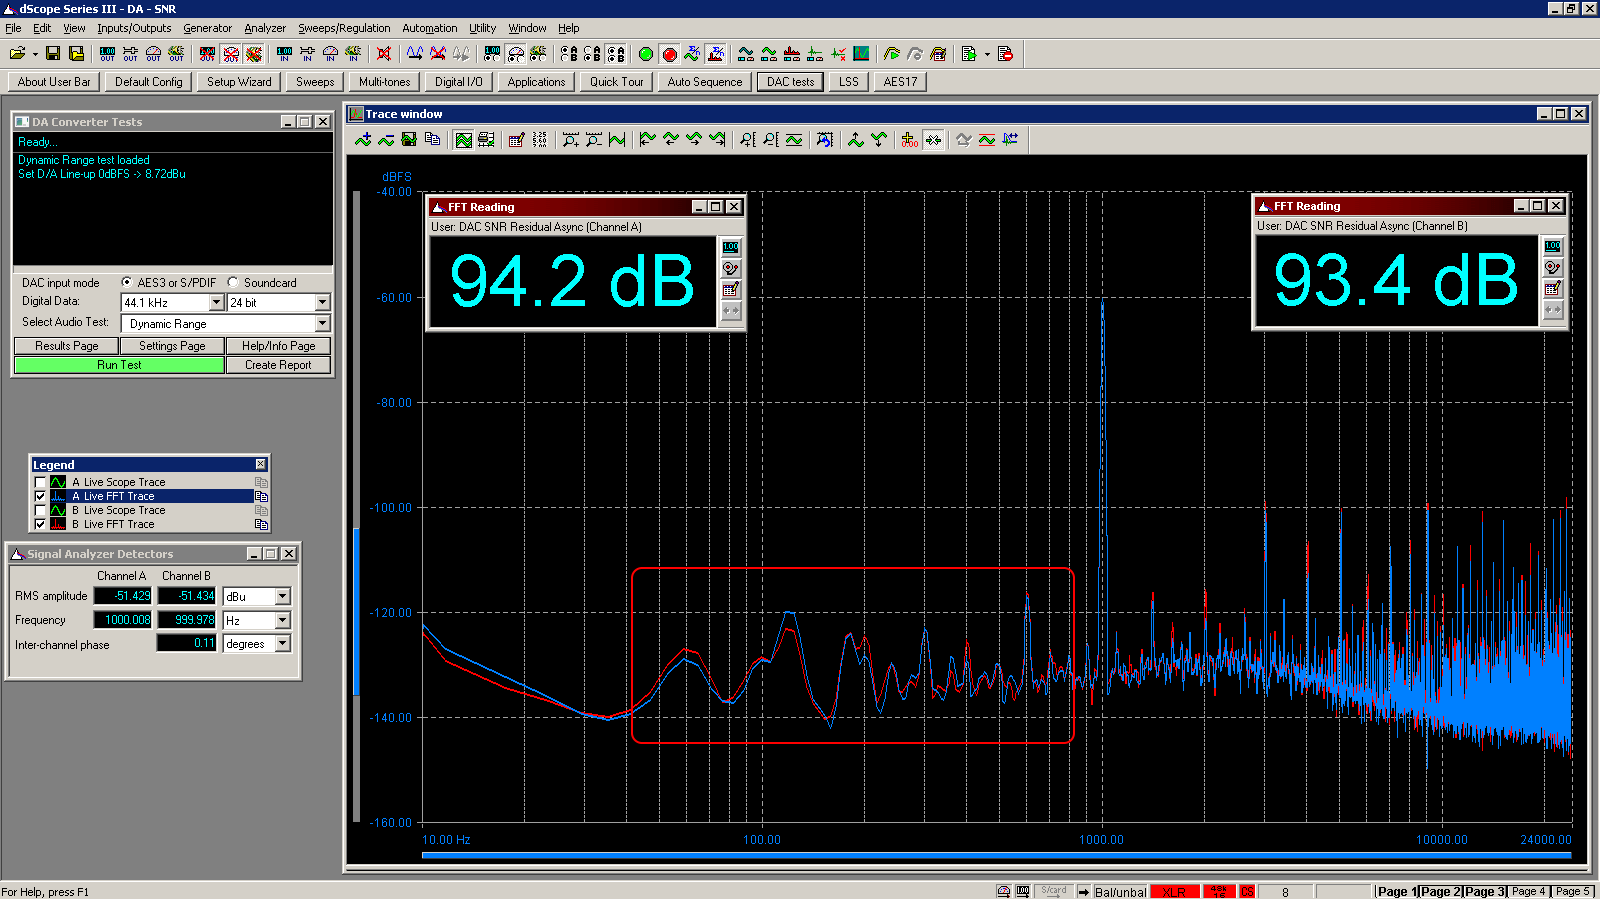 20151120 Bifrost MB SE dynamic range - mains noise annotation.png